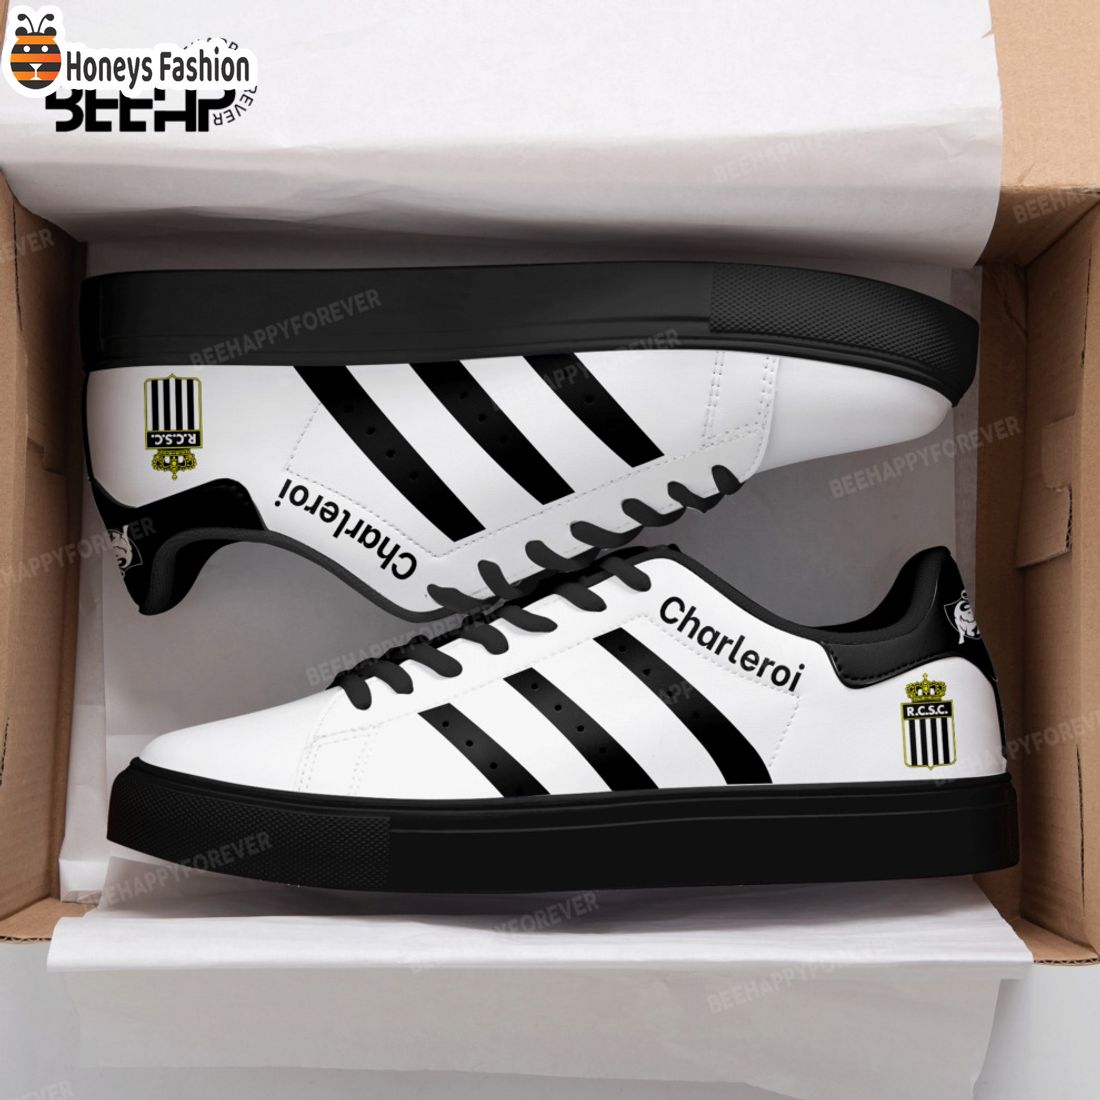 R. Charleroi S.C Stan Smith Adidas Shoes